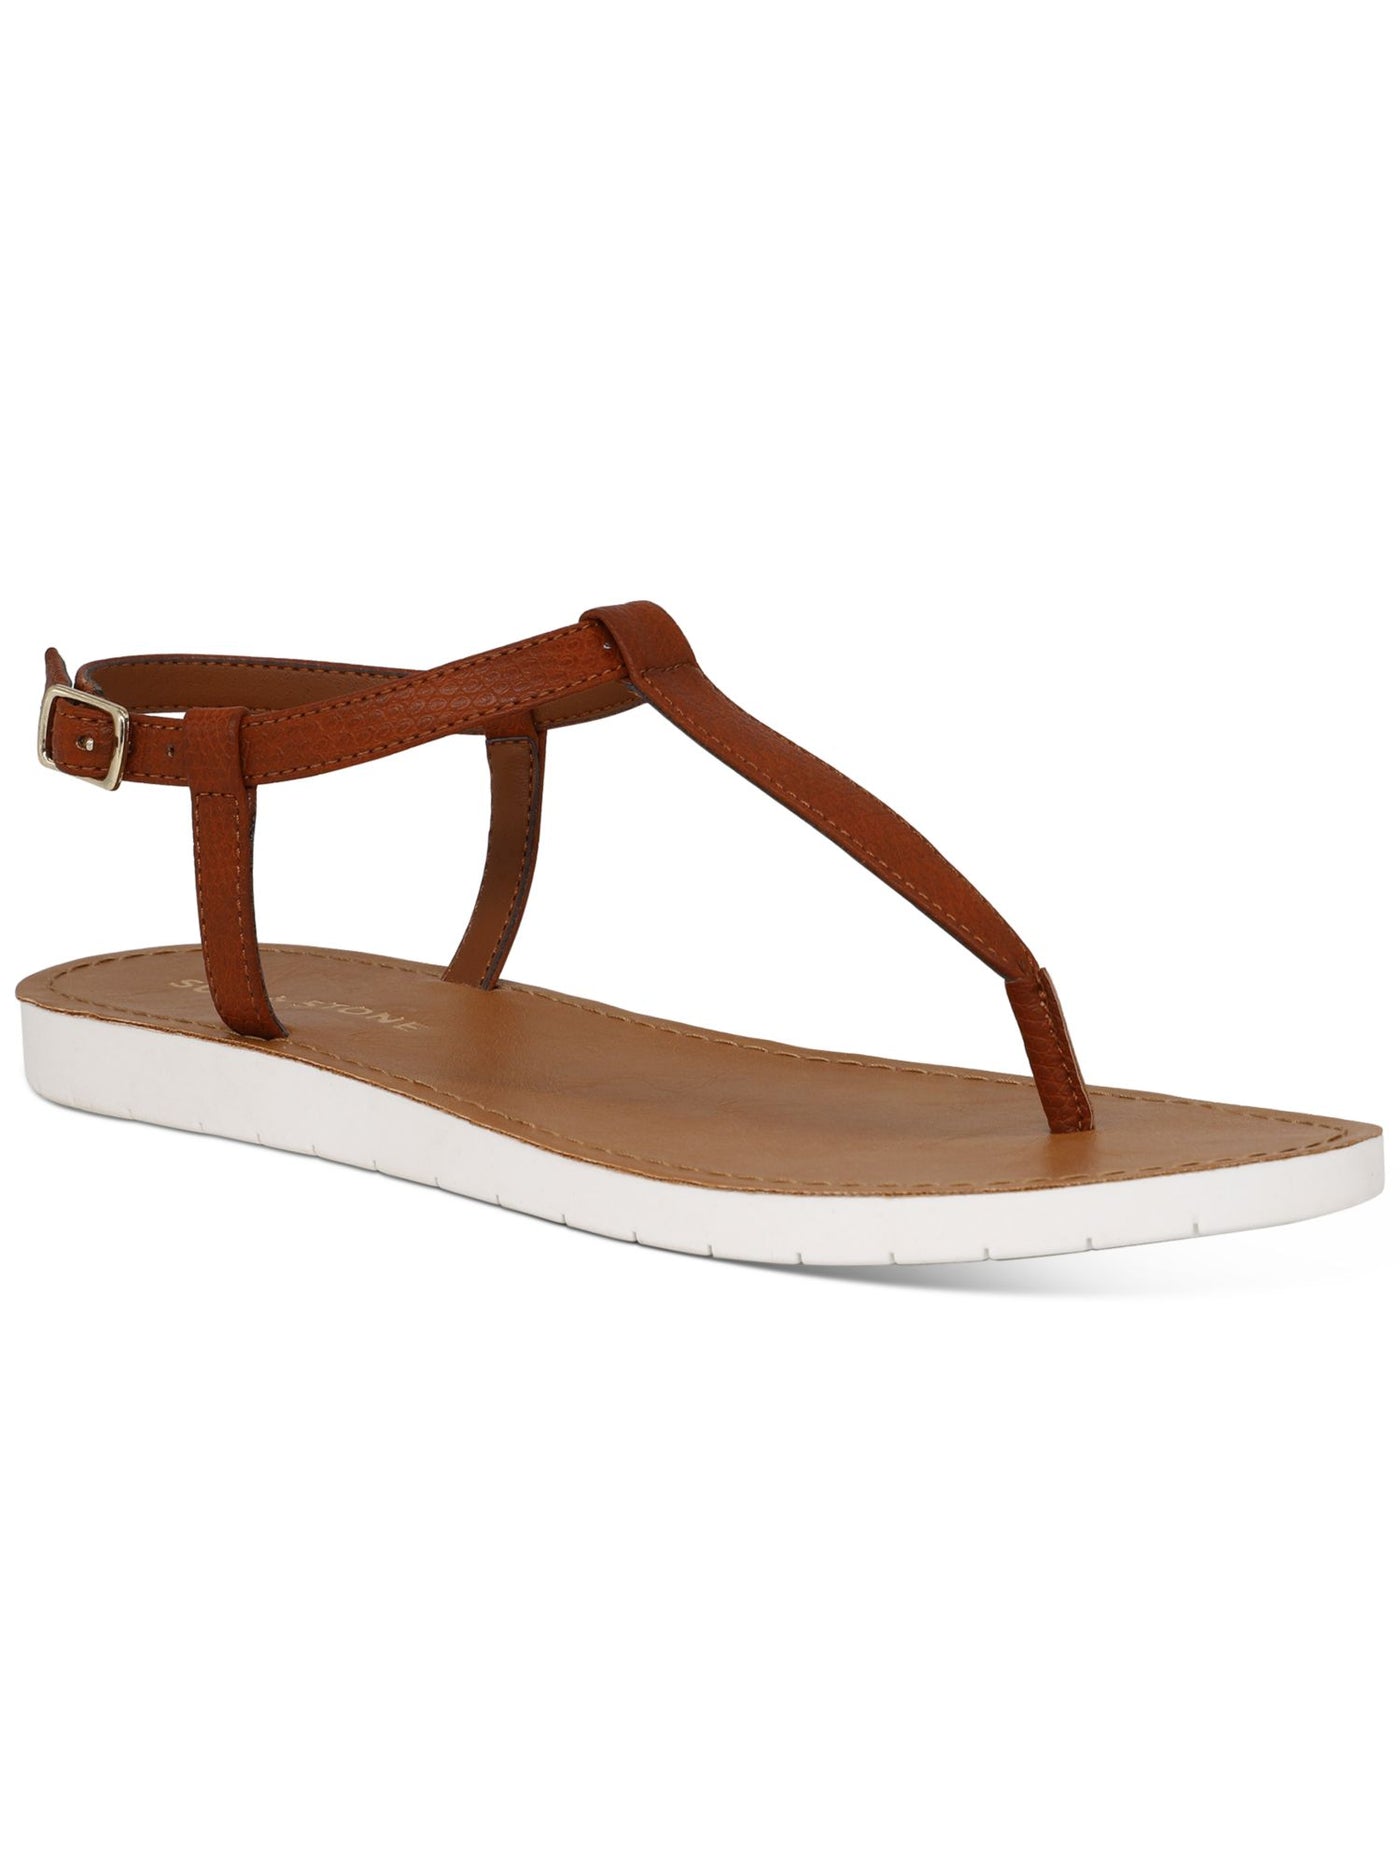 SUN STONE Womens Brown Slip Resistant Cushioned Kristi Round Toe Buckle Slingback Sandal 6 M